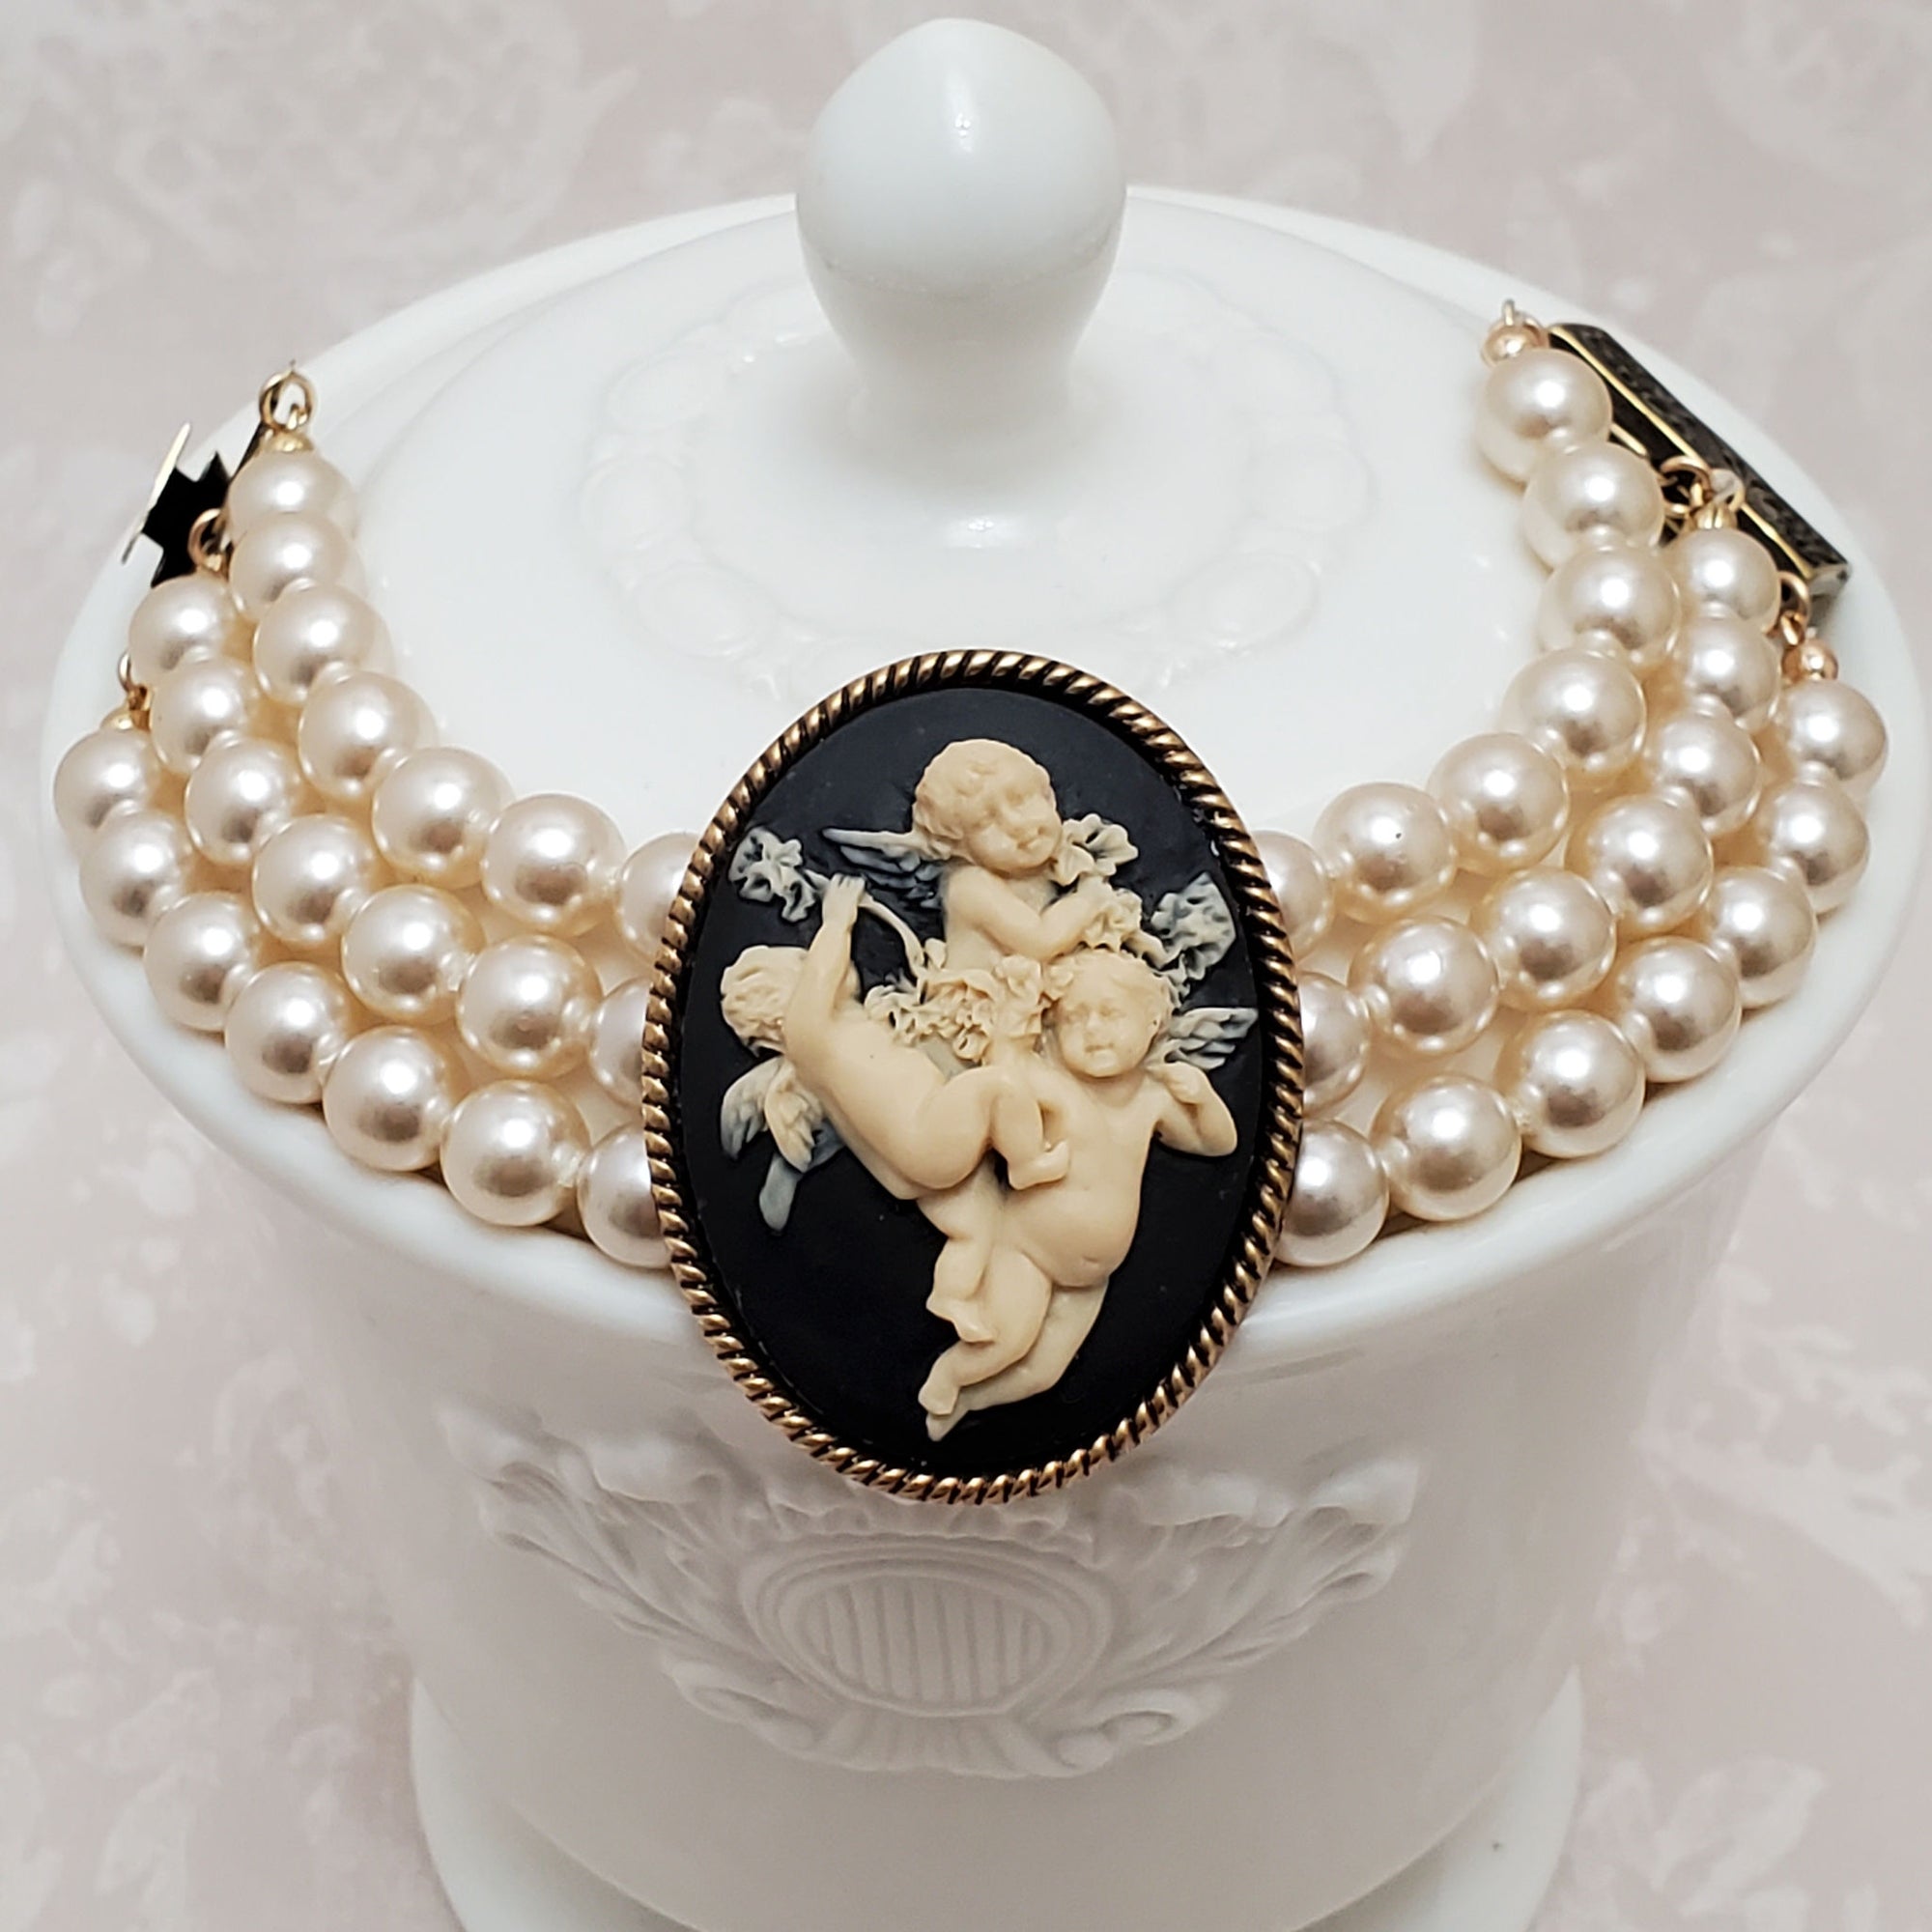 Cherub Pendant Bracelet with three strands of quality vintage costume pearls